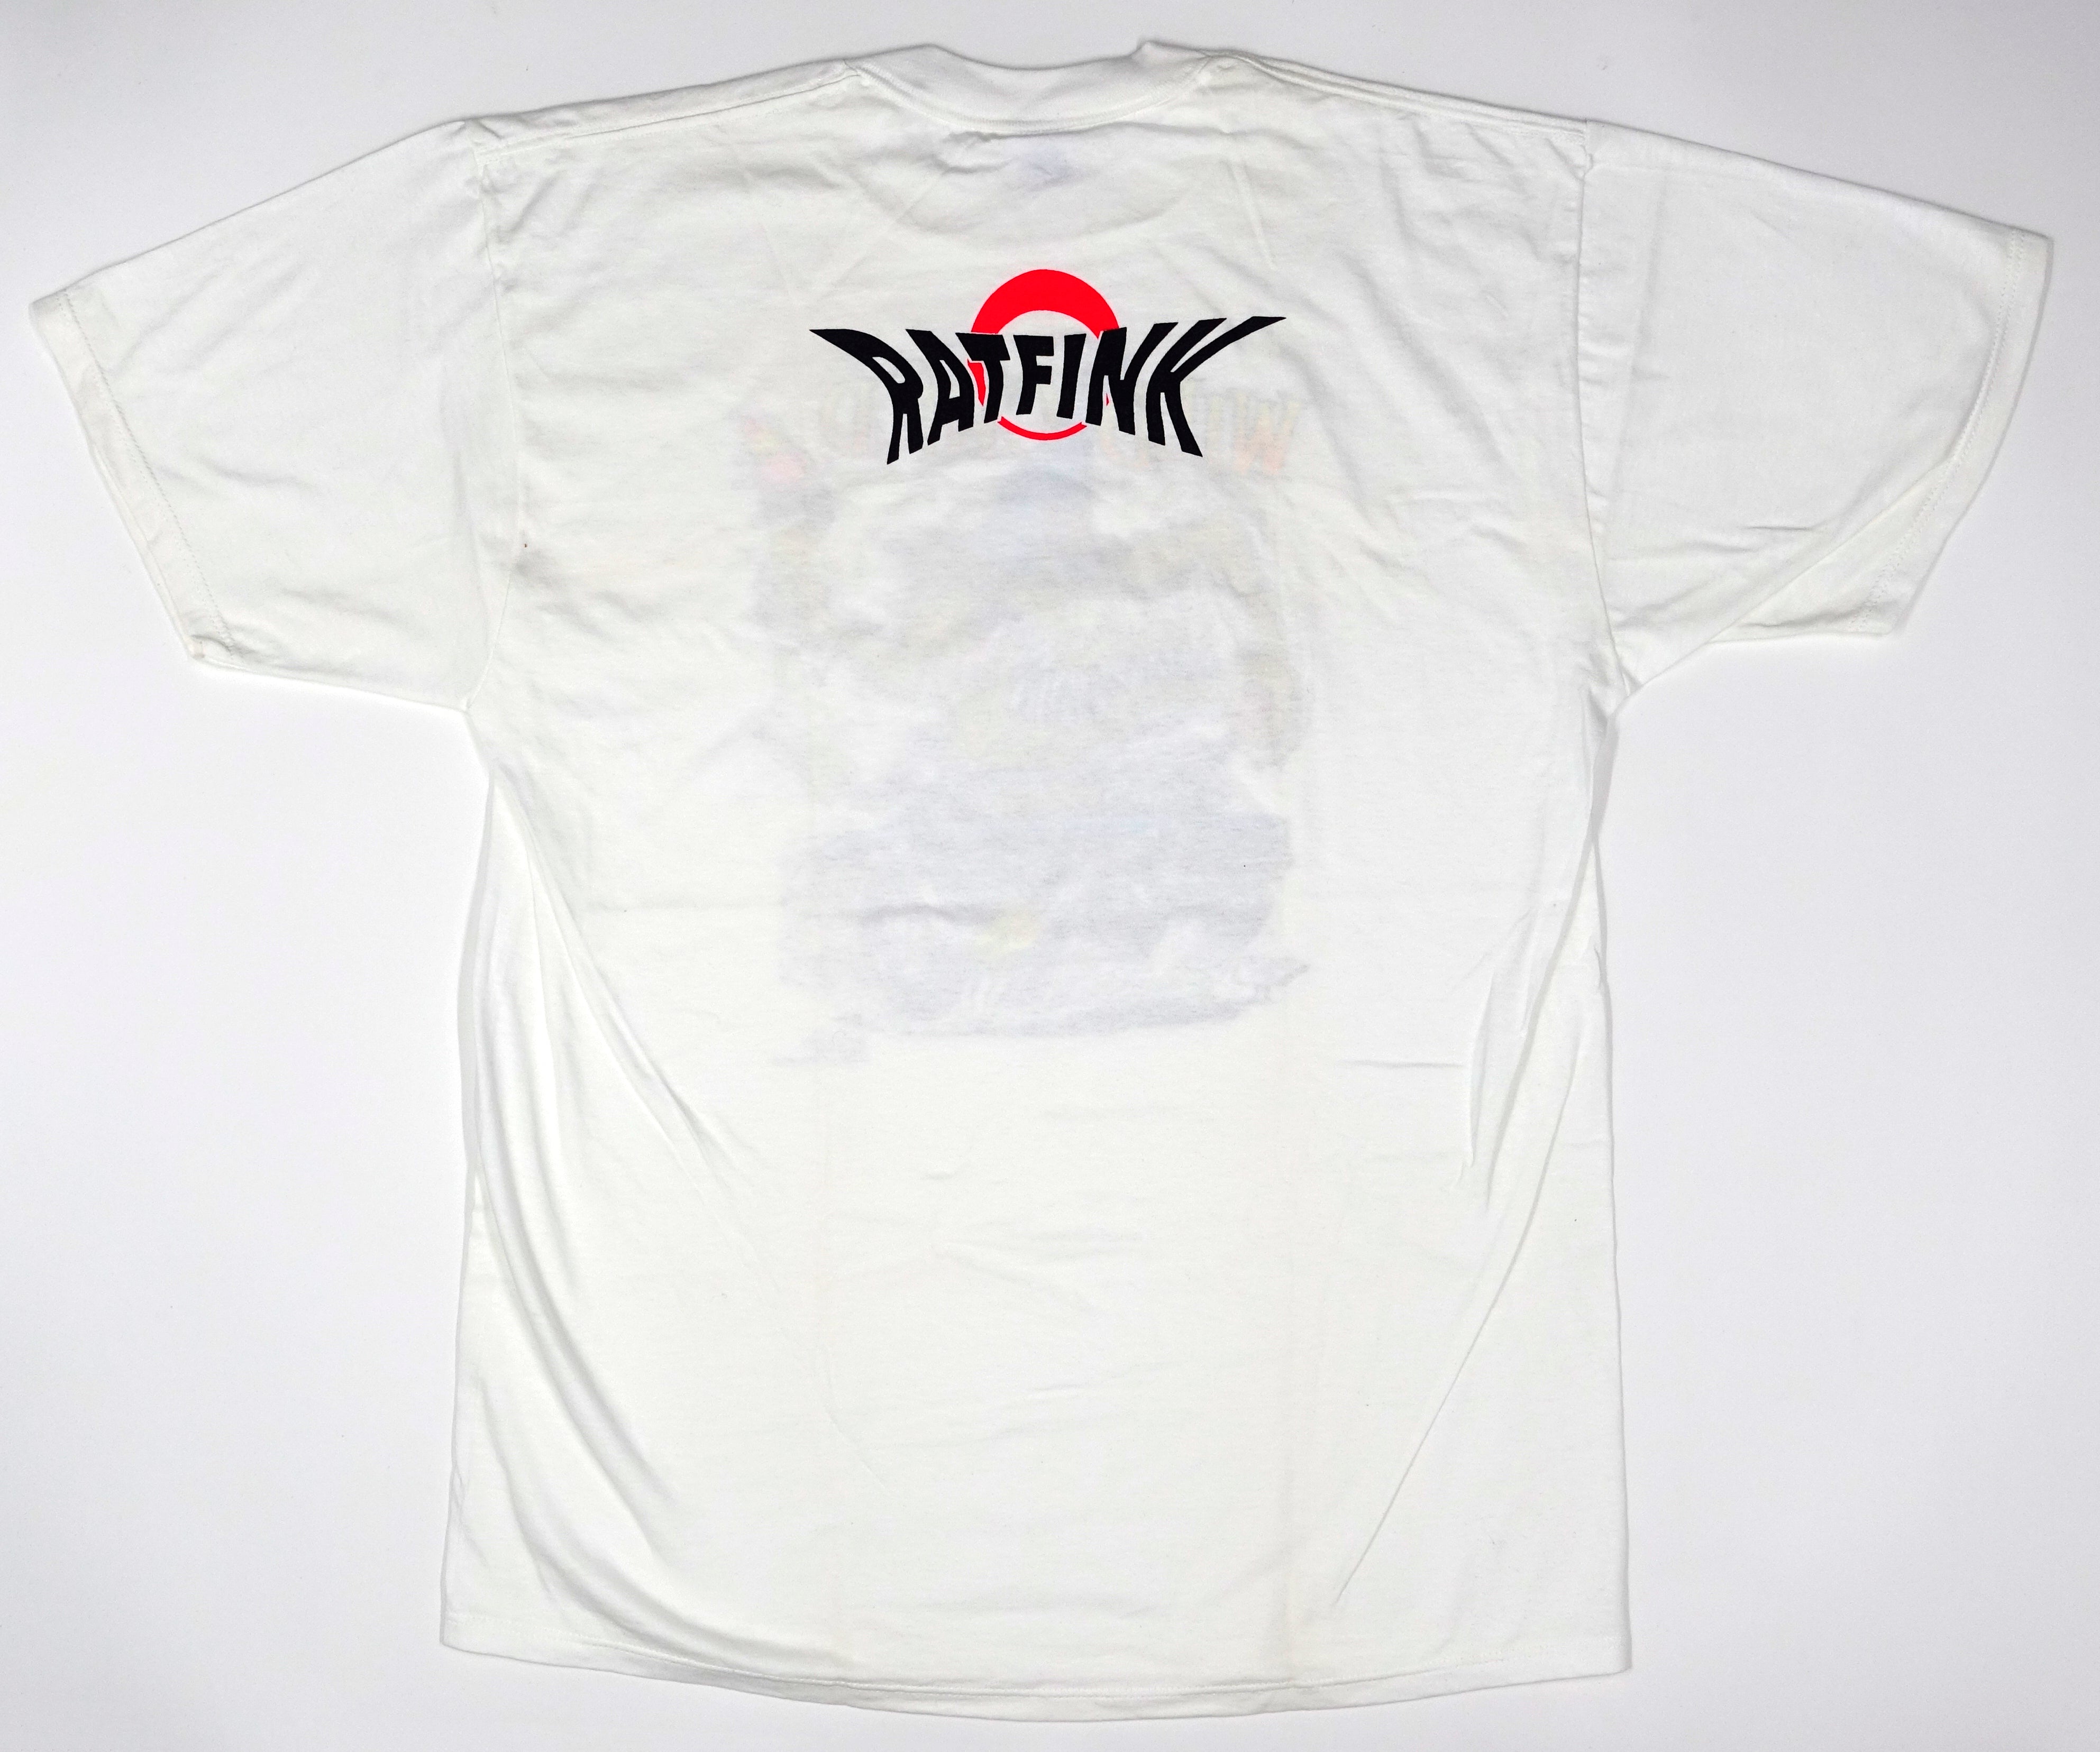 Ed Roth - Rat Fink Wildchild 1994 Shirt Size XL